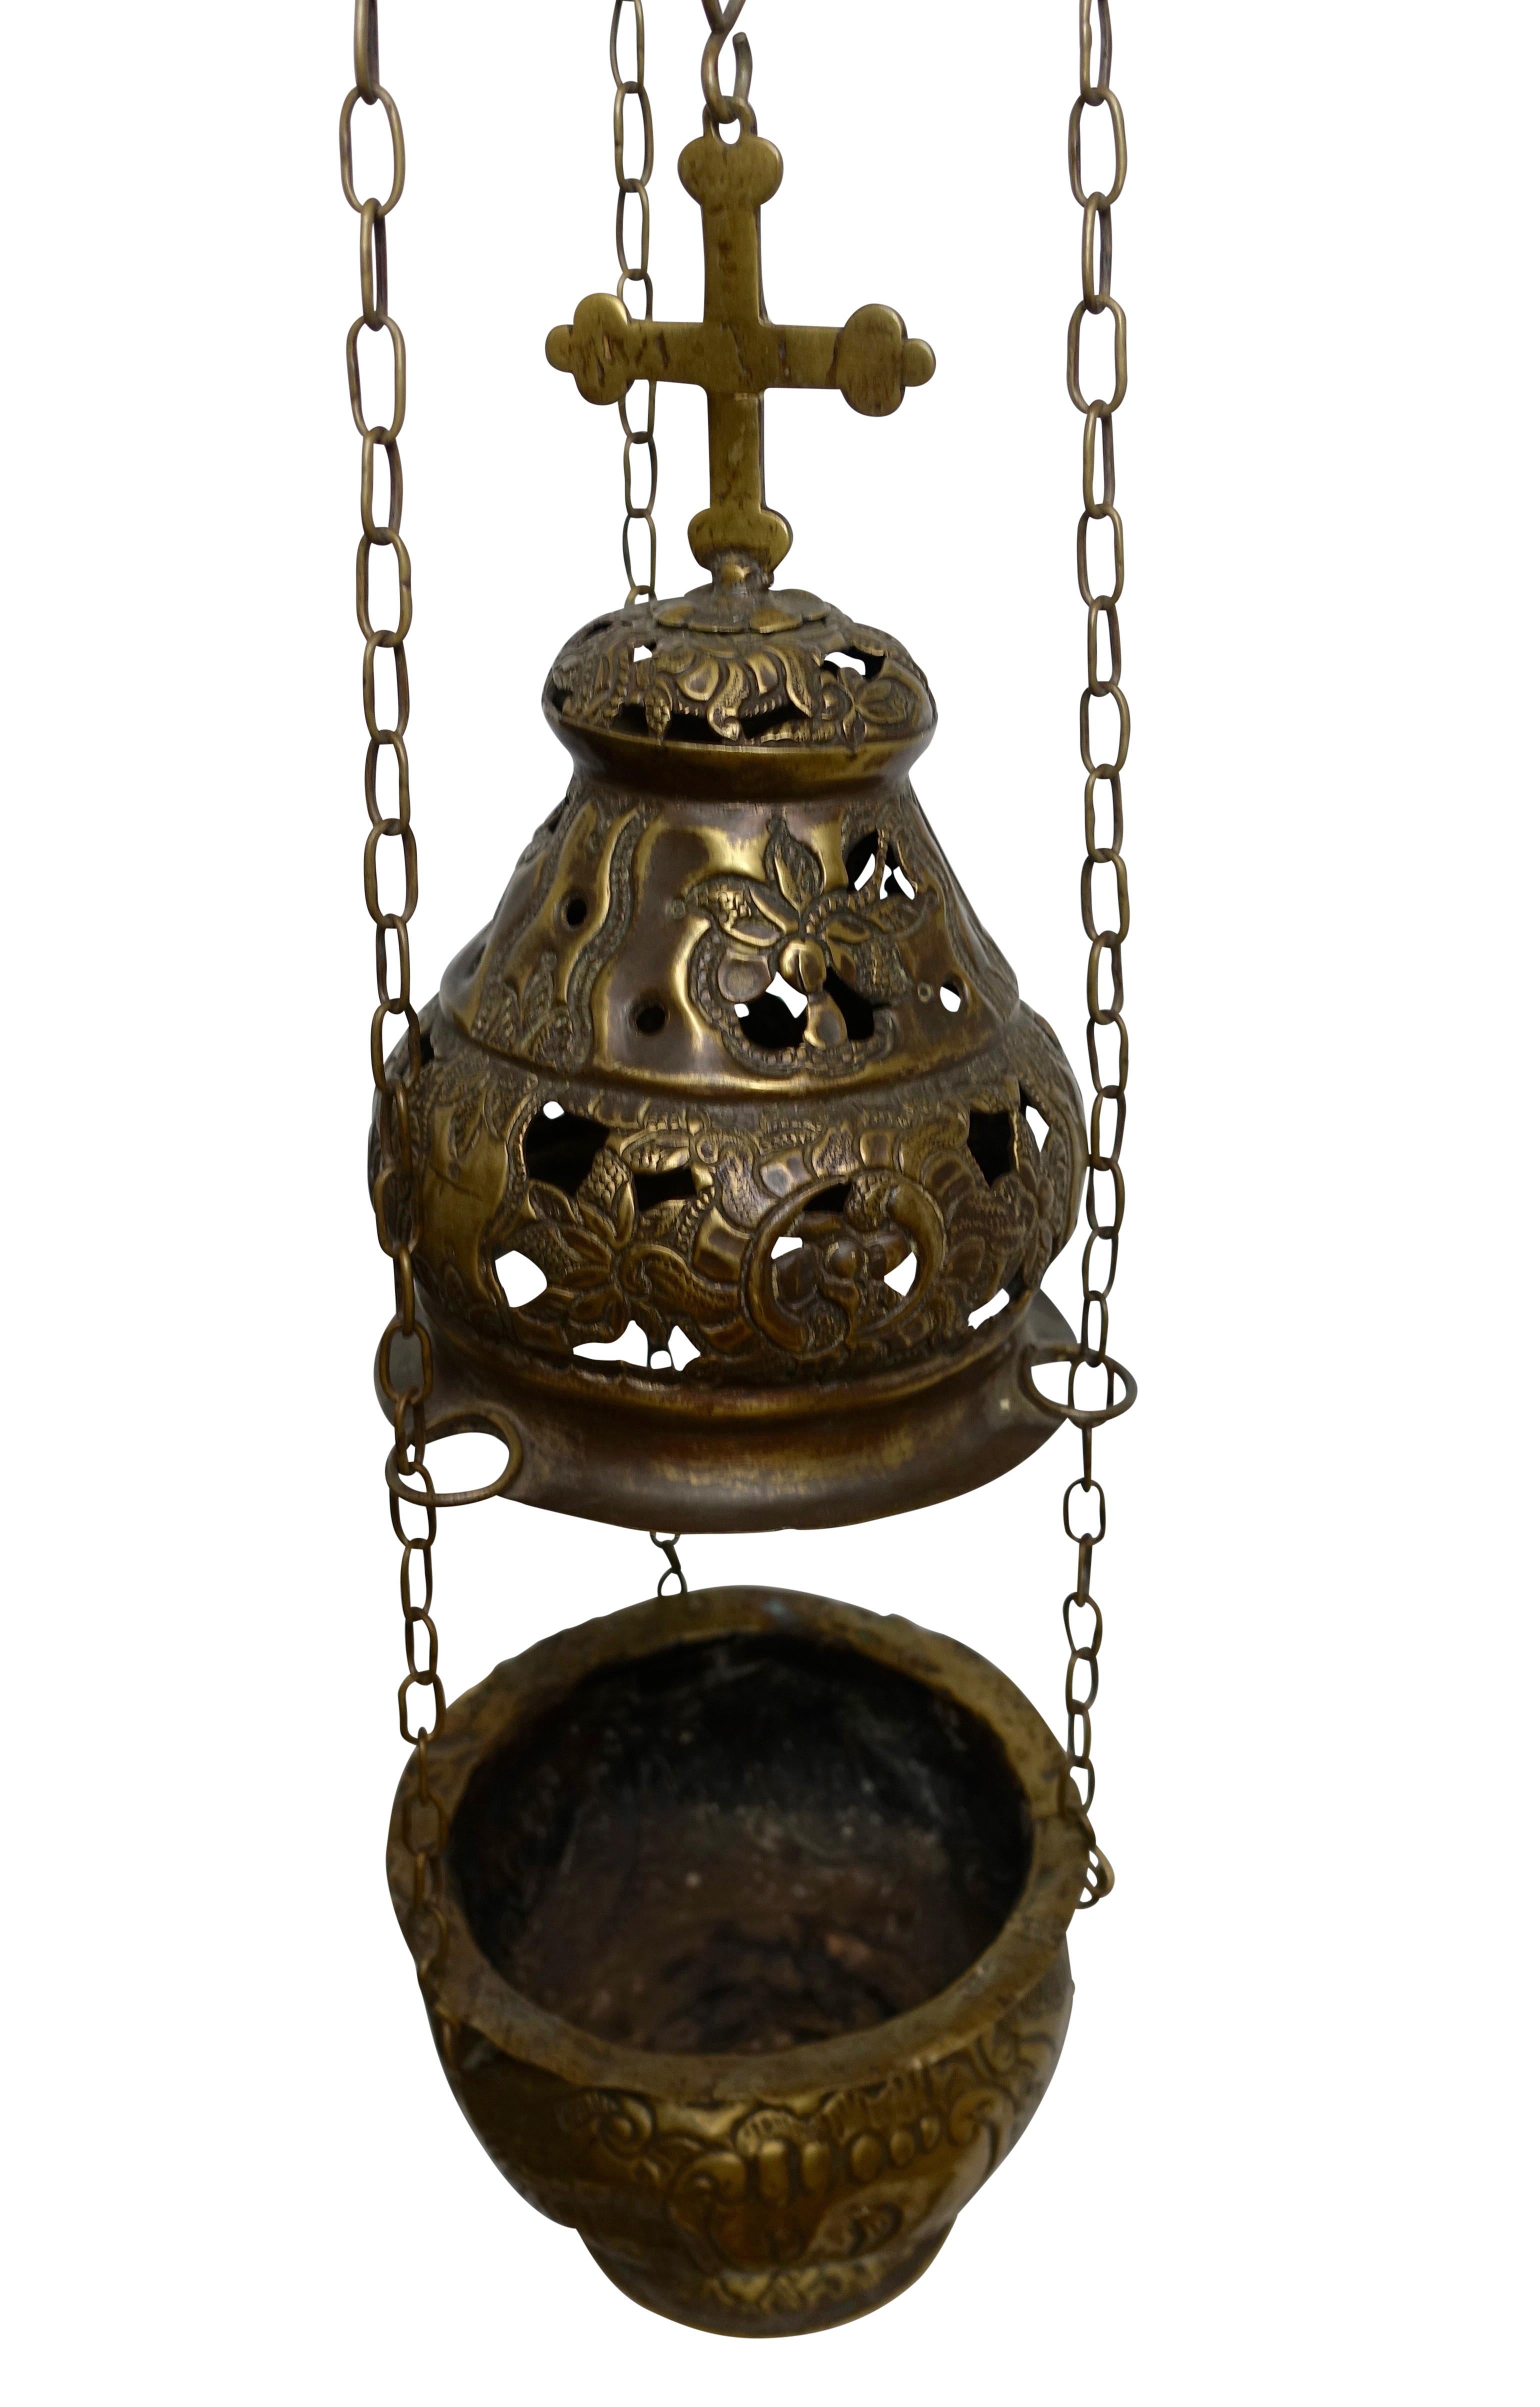 Repoussé Religious Repousse Brass Hanging Incense Burner, Spanish Colonial, 19th Century